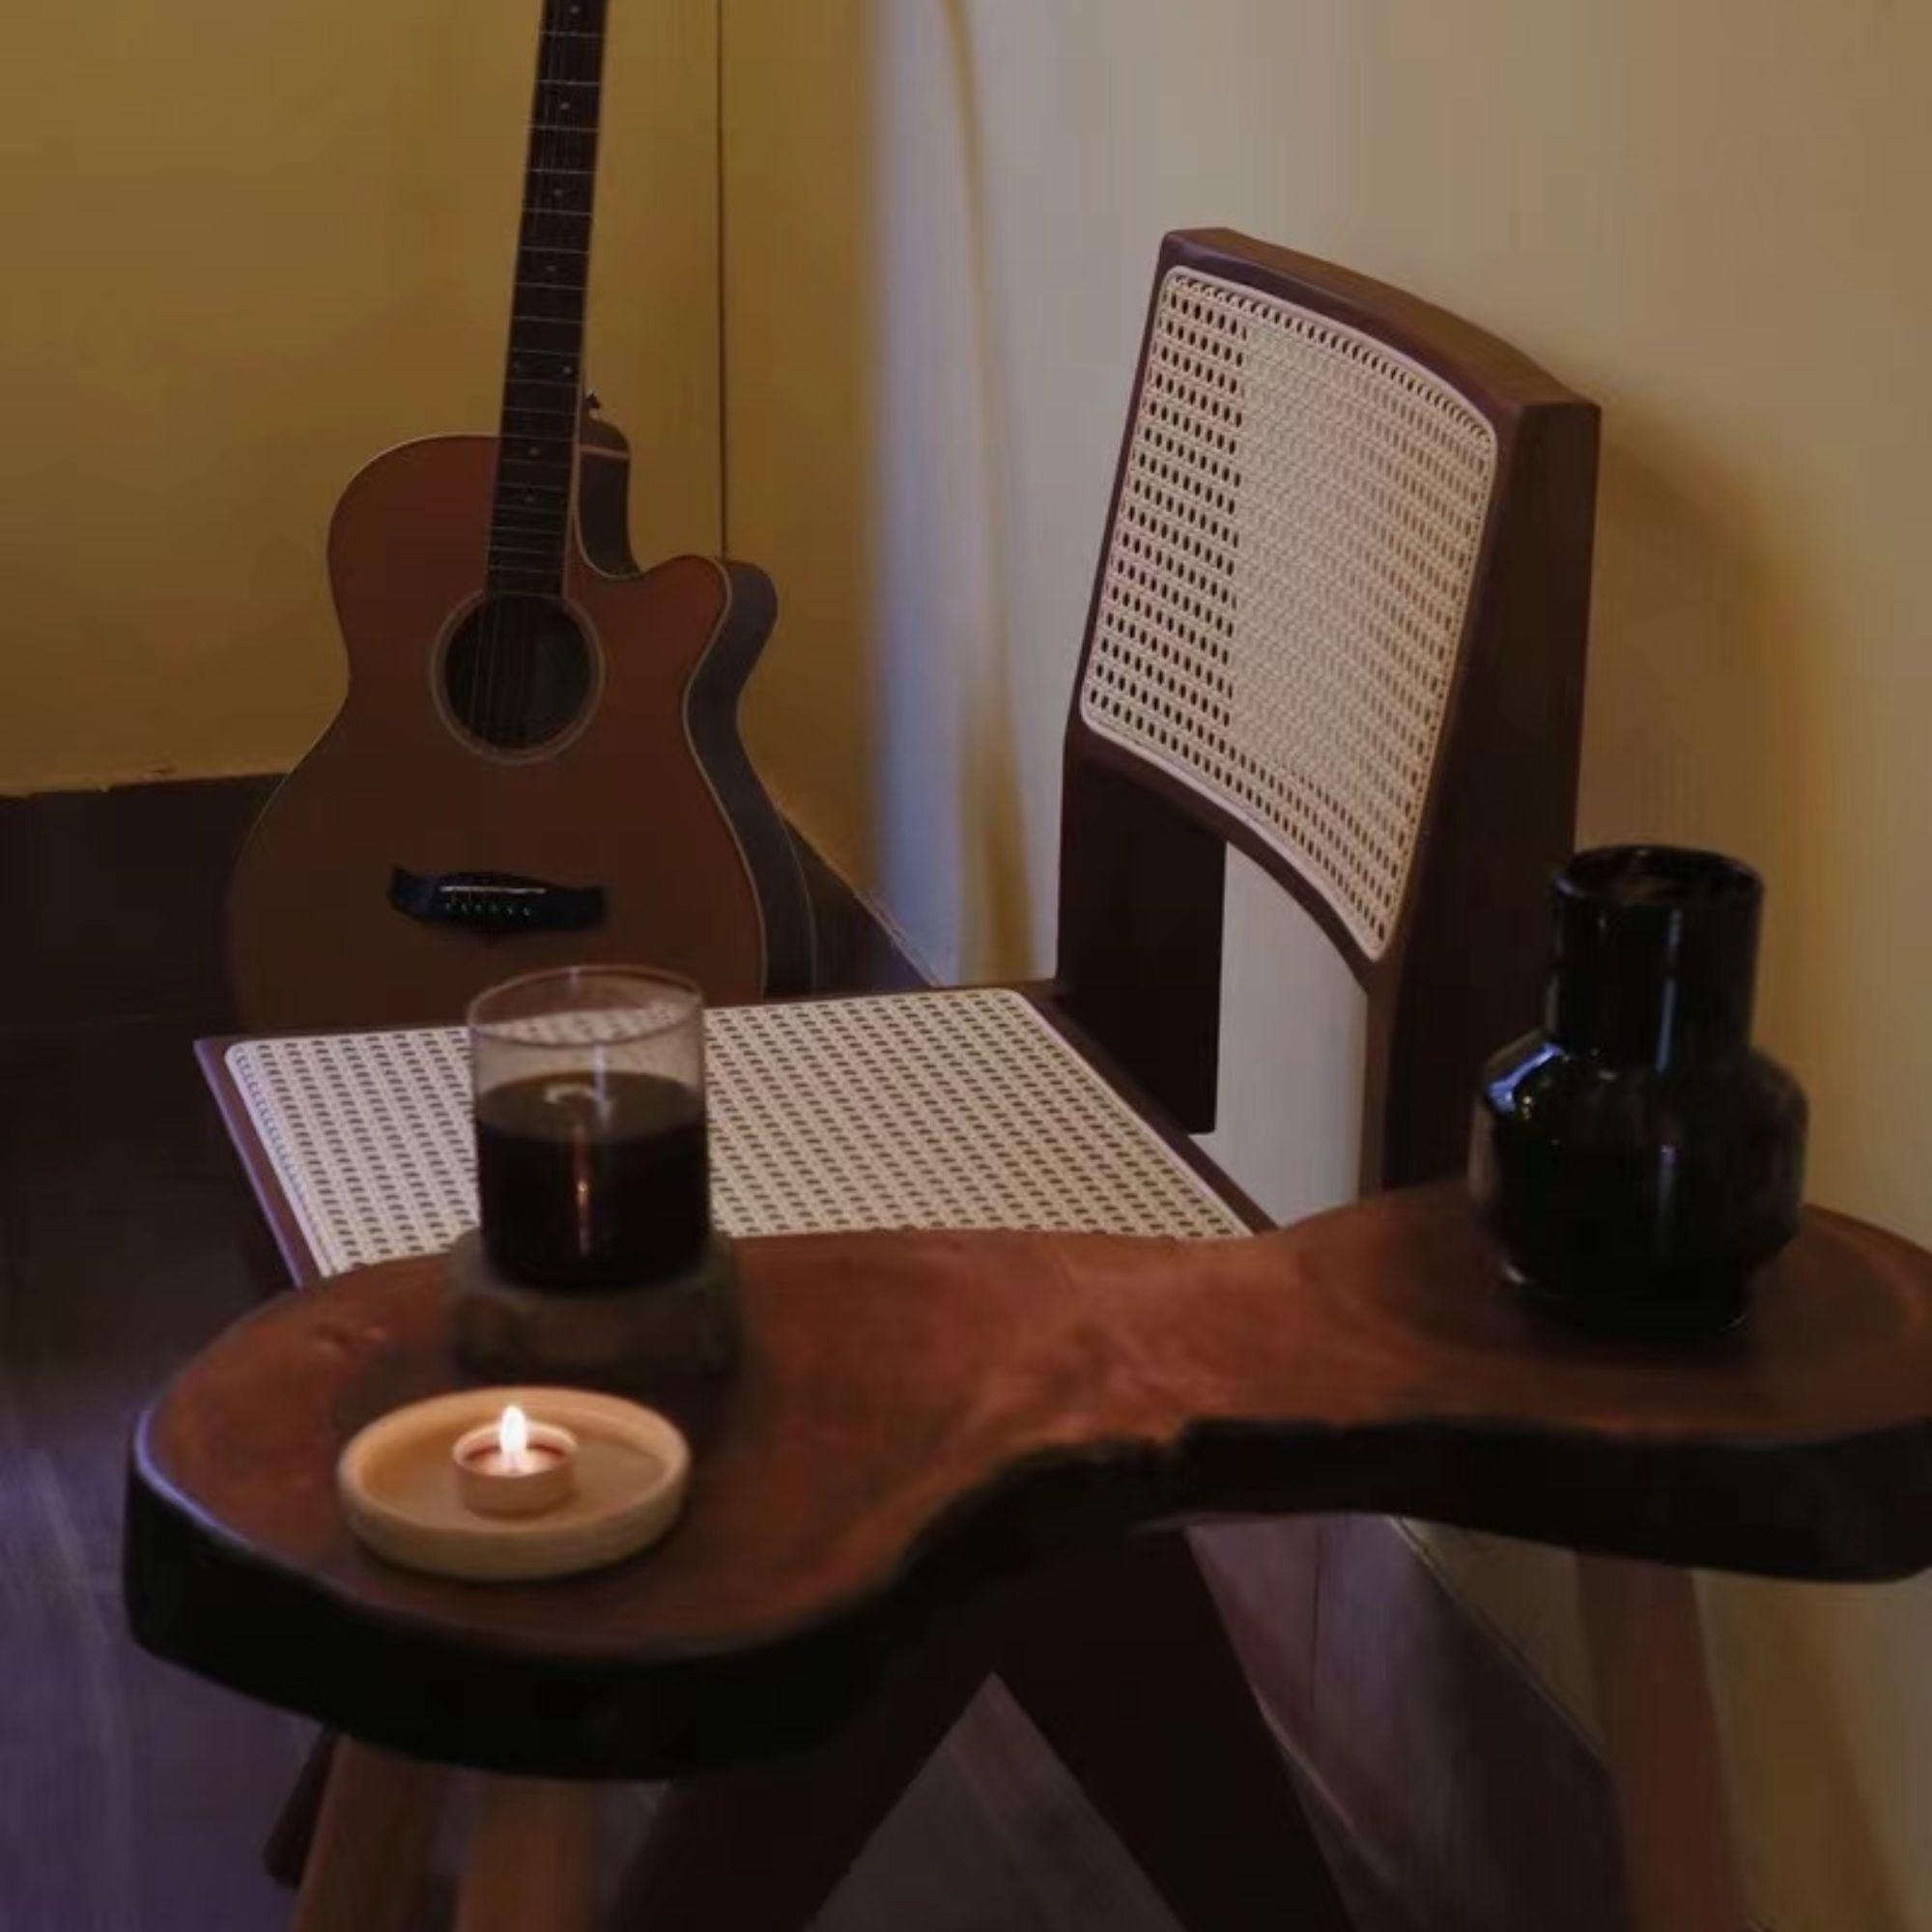 Tara poplar wood chair artistic shot, guitar and candles